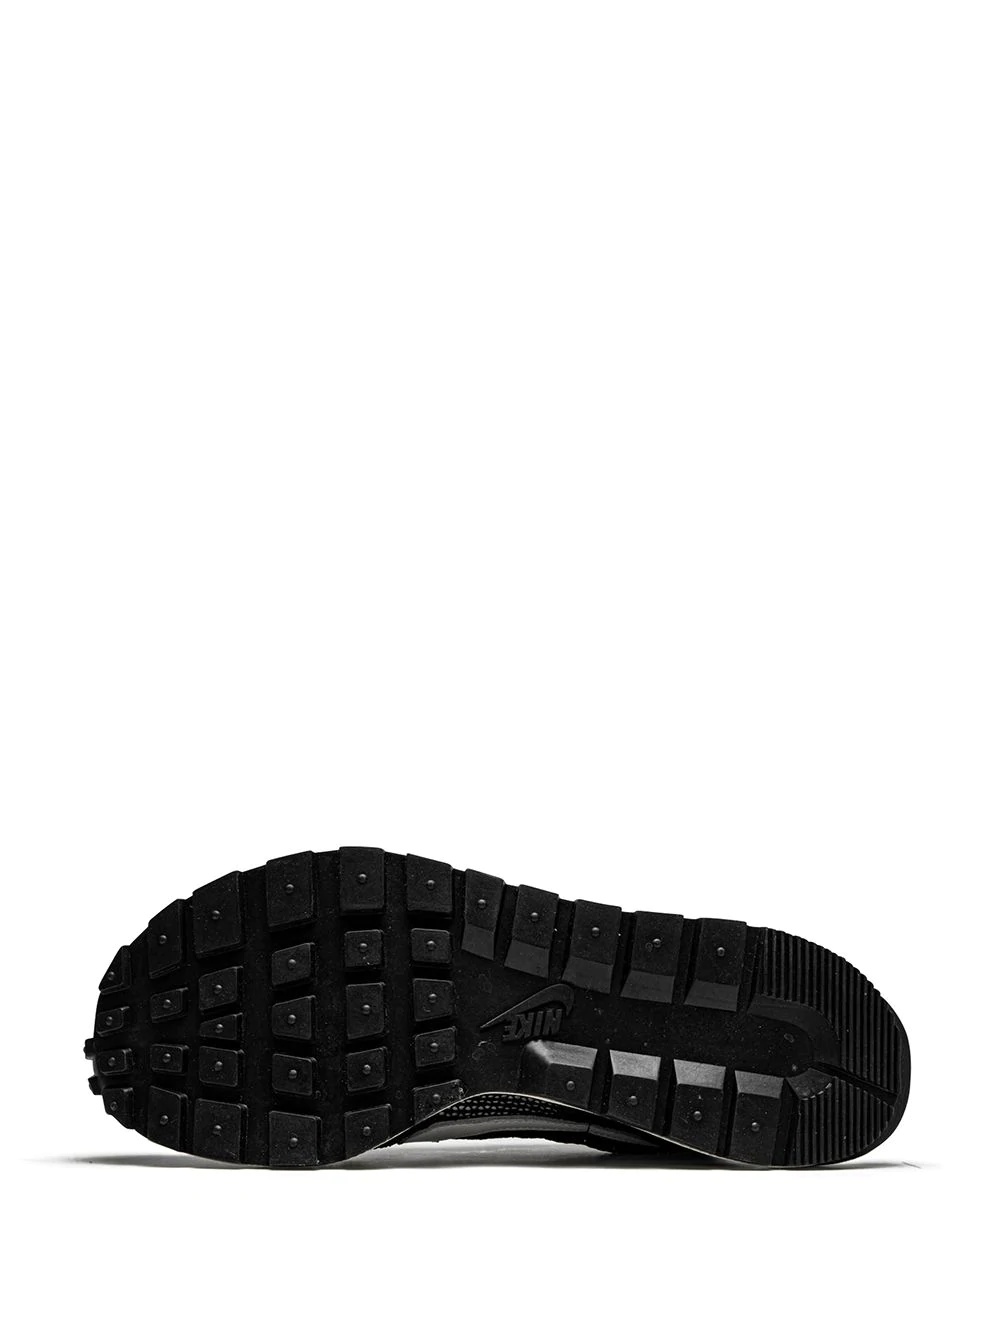 x sacai VaporWaffle "Black White" sneakers - 4